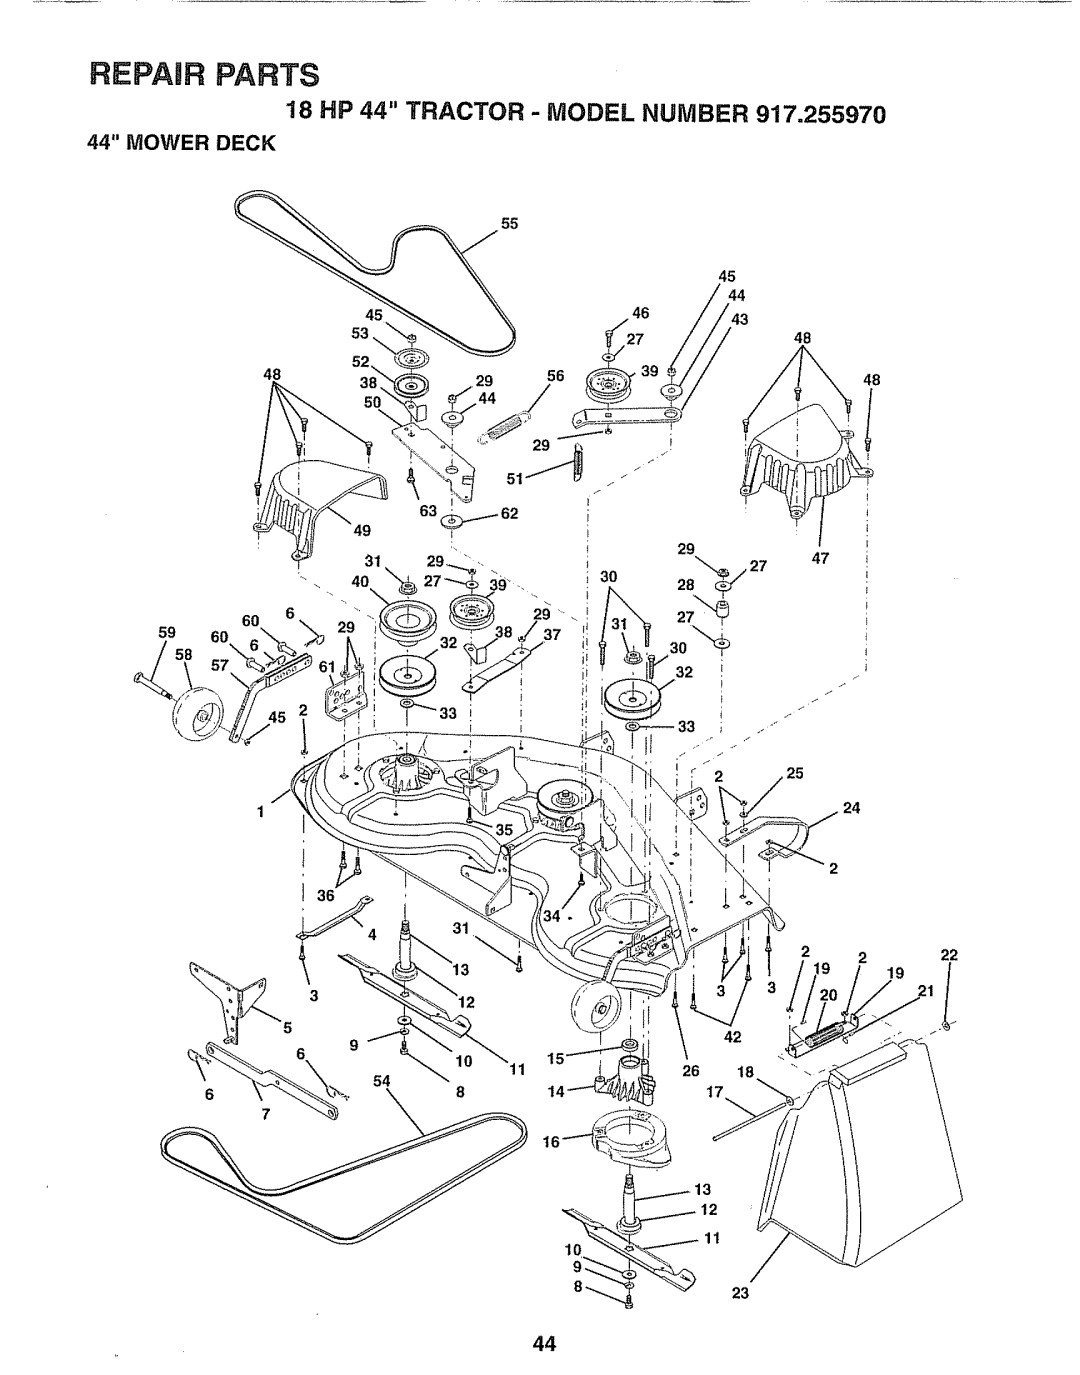 Sears 917.25597 owner manual Mower Deck, Repair Parts, 18 HP 44 TRACTOR - MODEL NUMBER, 8-_23 